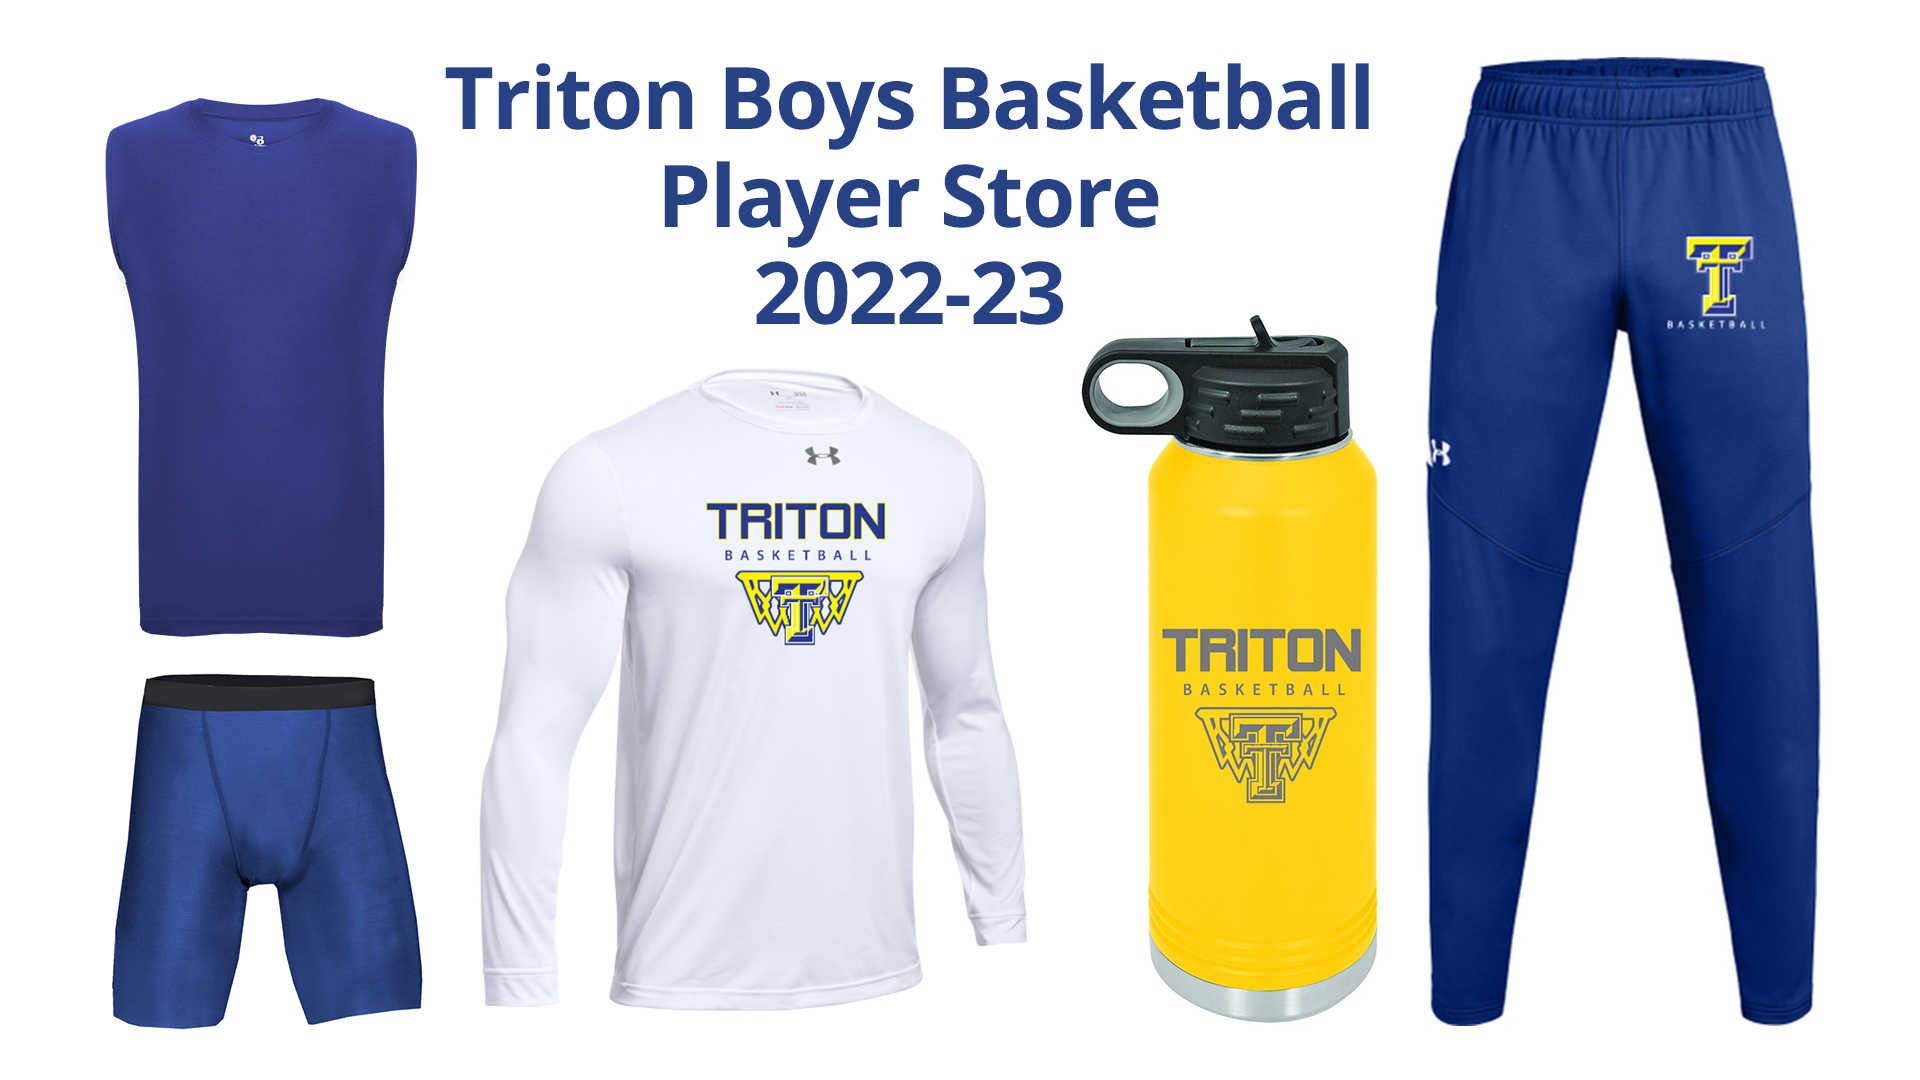 2022-23 Triton Boys Basketball Team Shop & Junior League Form